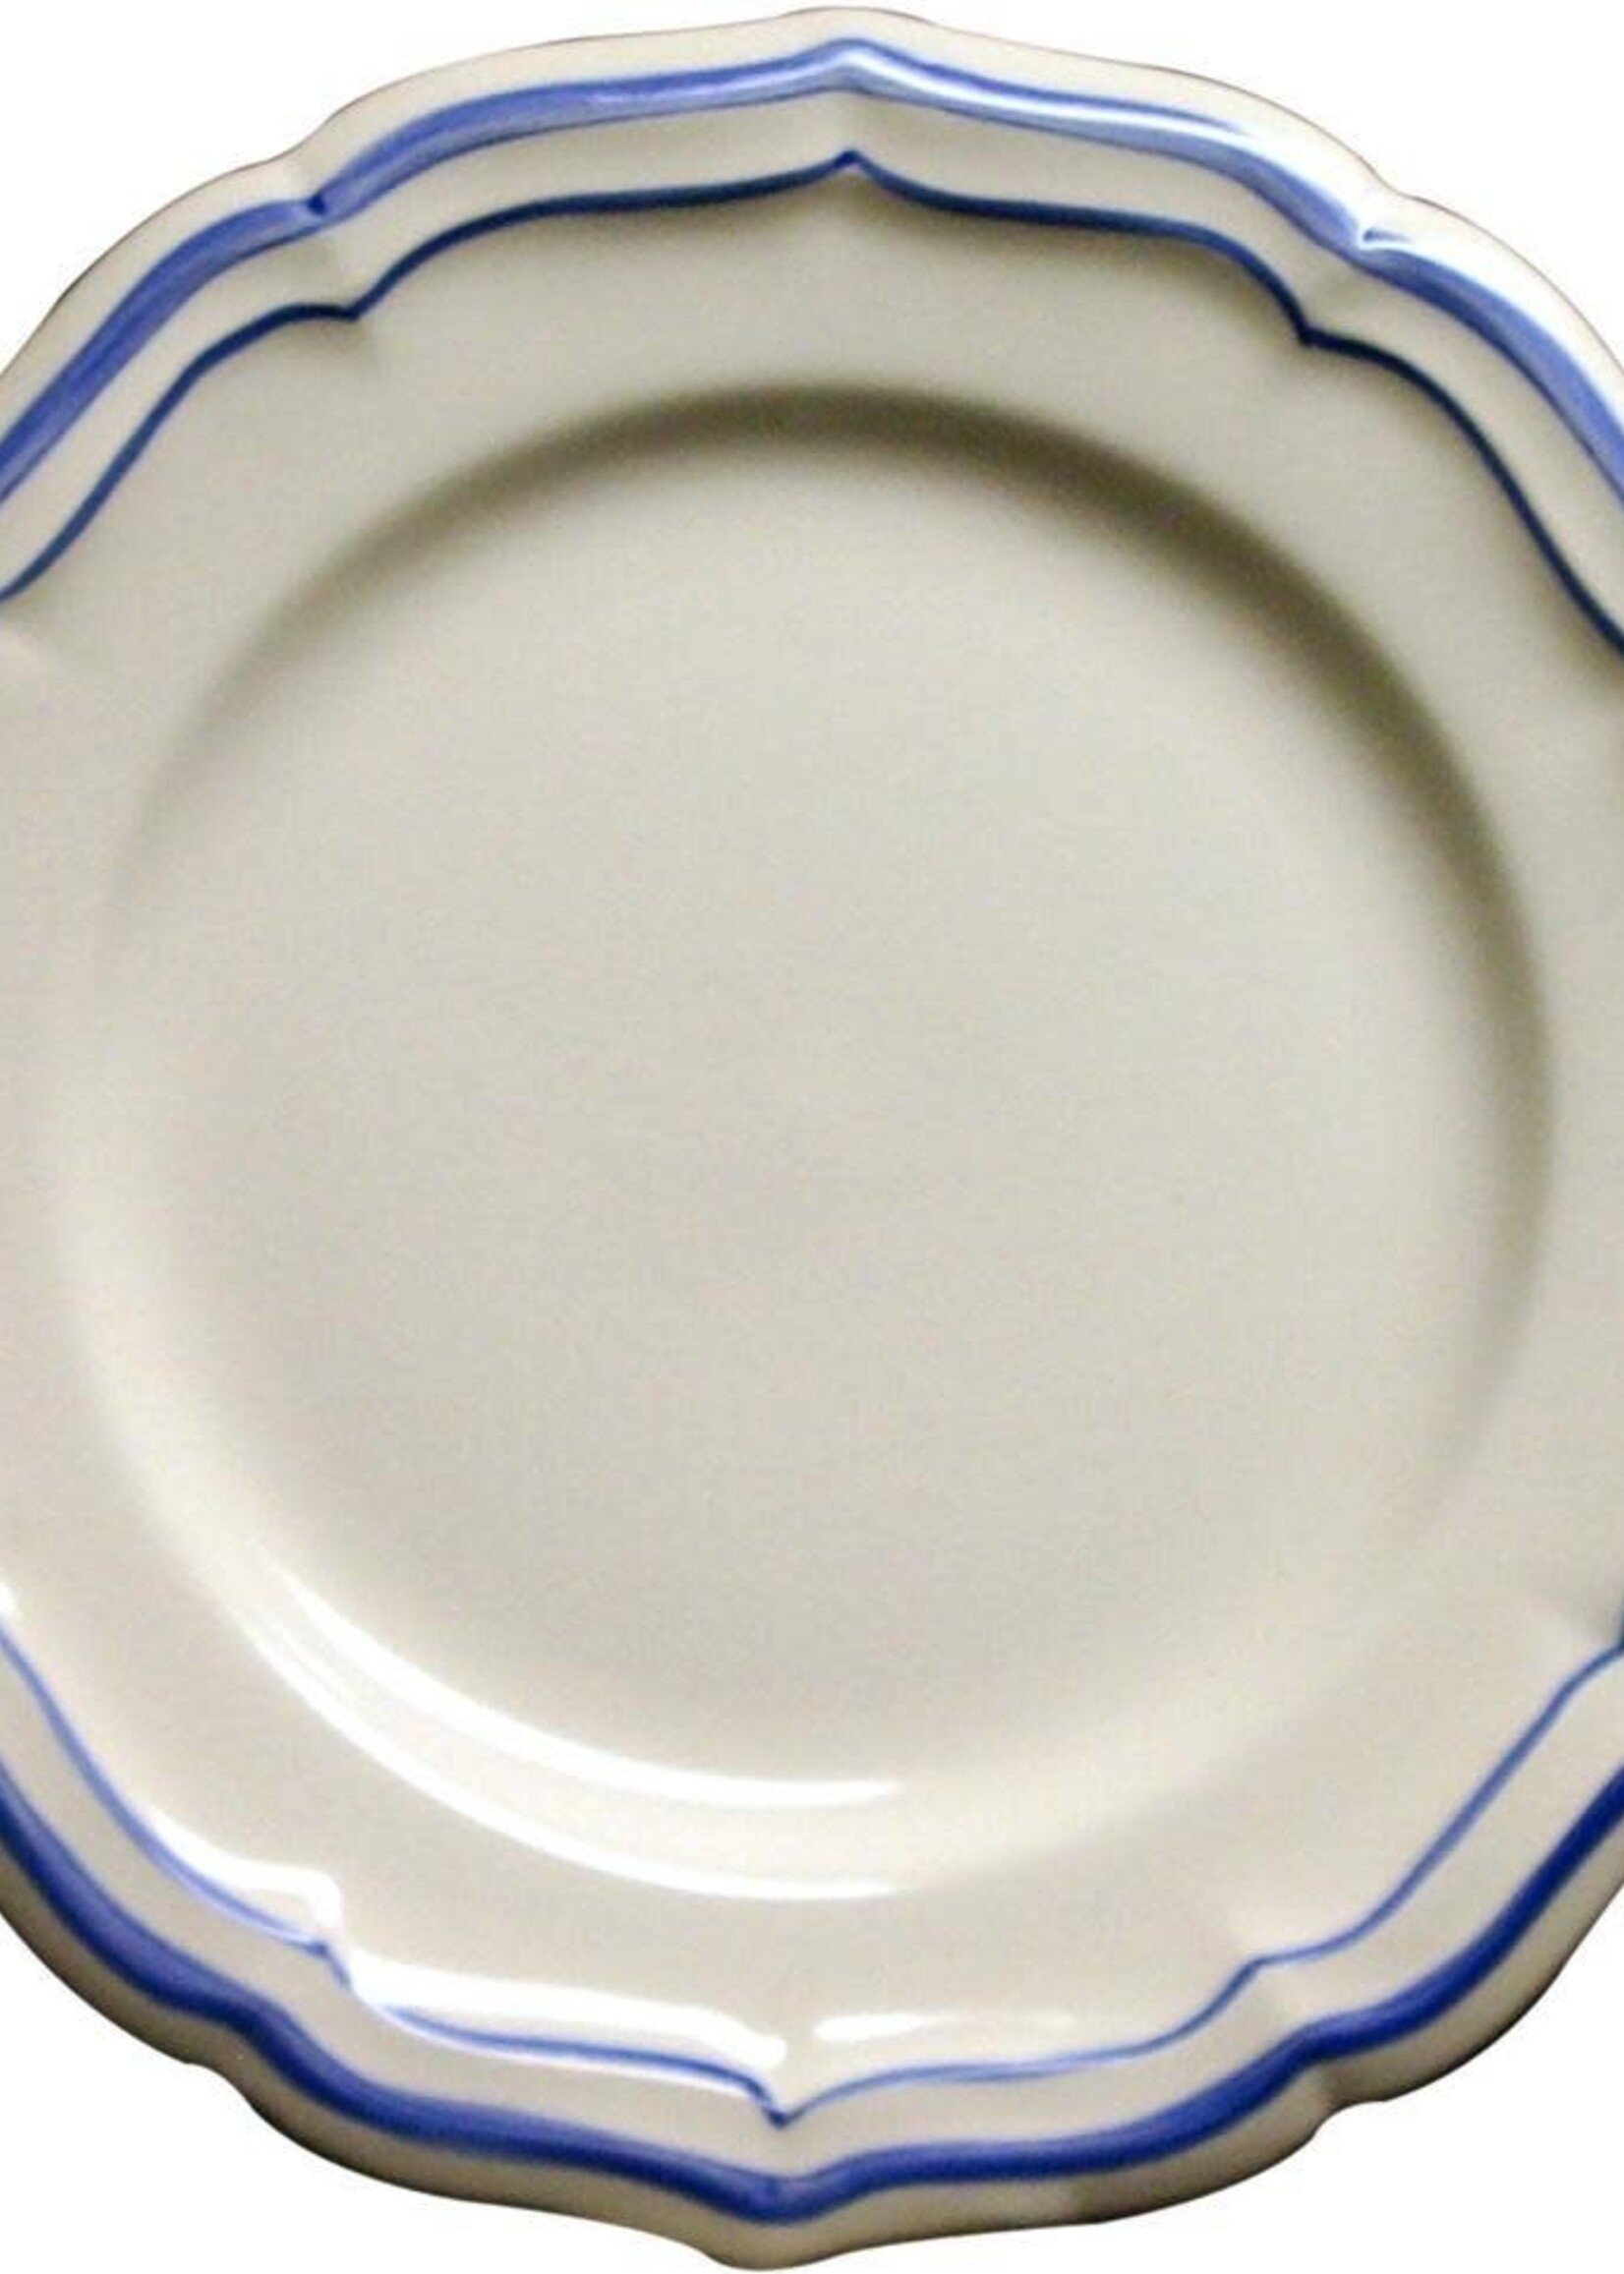 Gien Filet Bleu Canape Plate